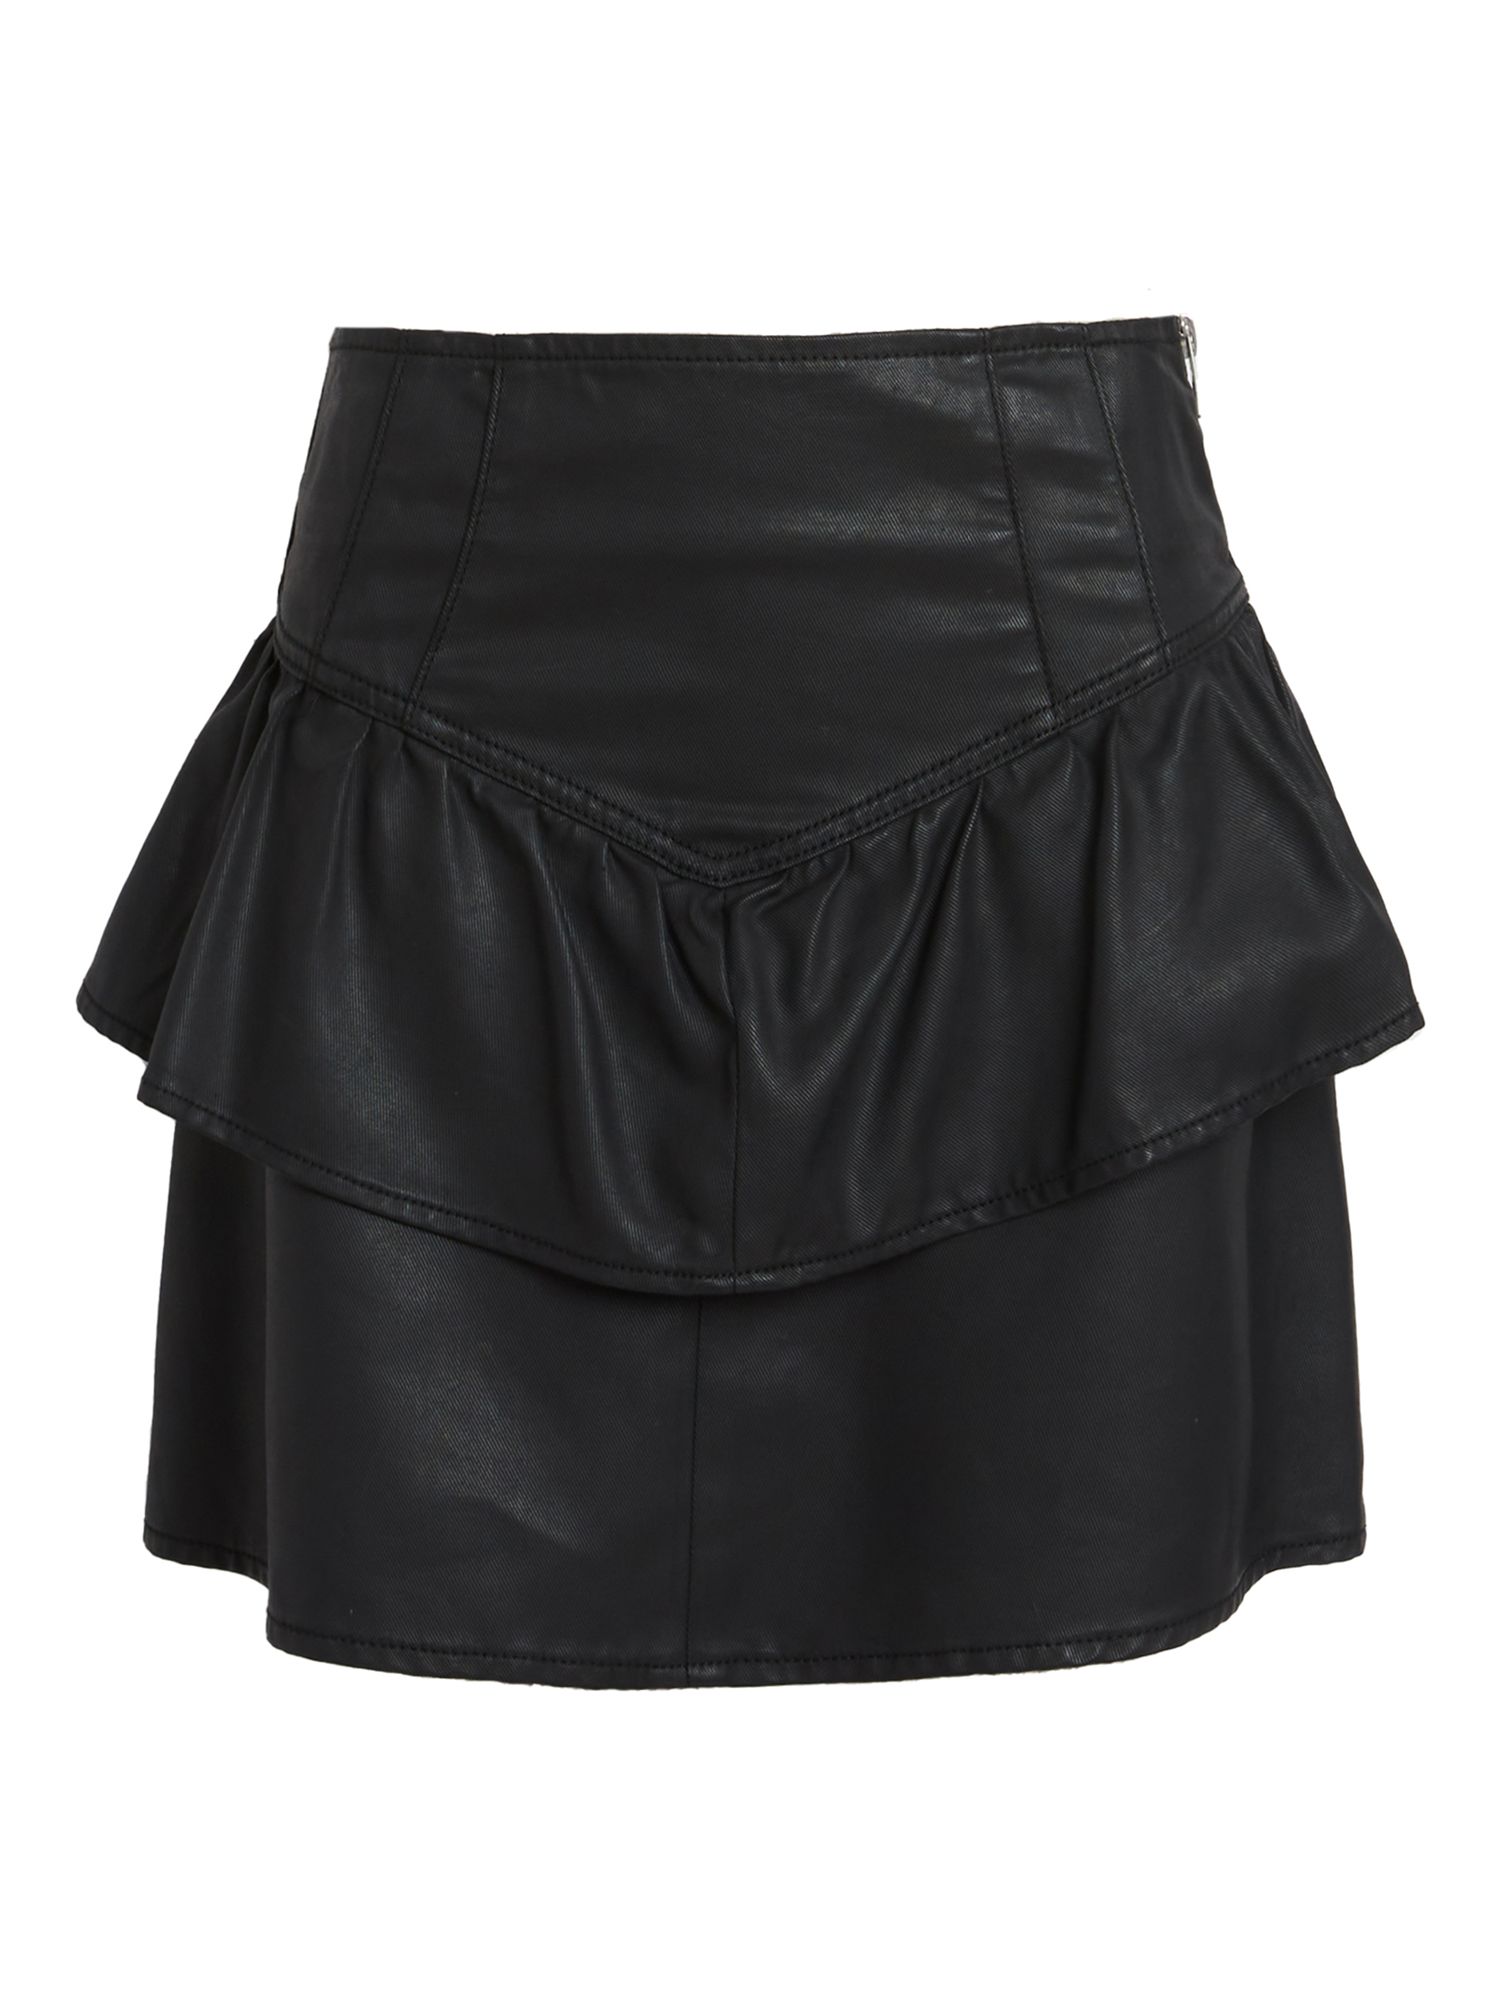 AllSaints Andy Coated Denim Mini Skirt, Black at John Lewis & Partners